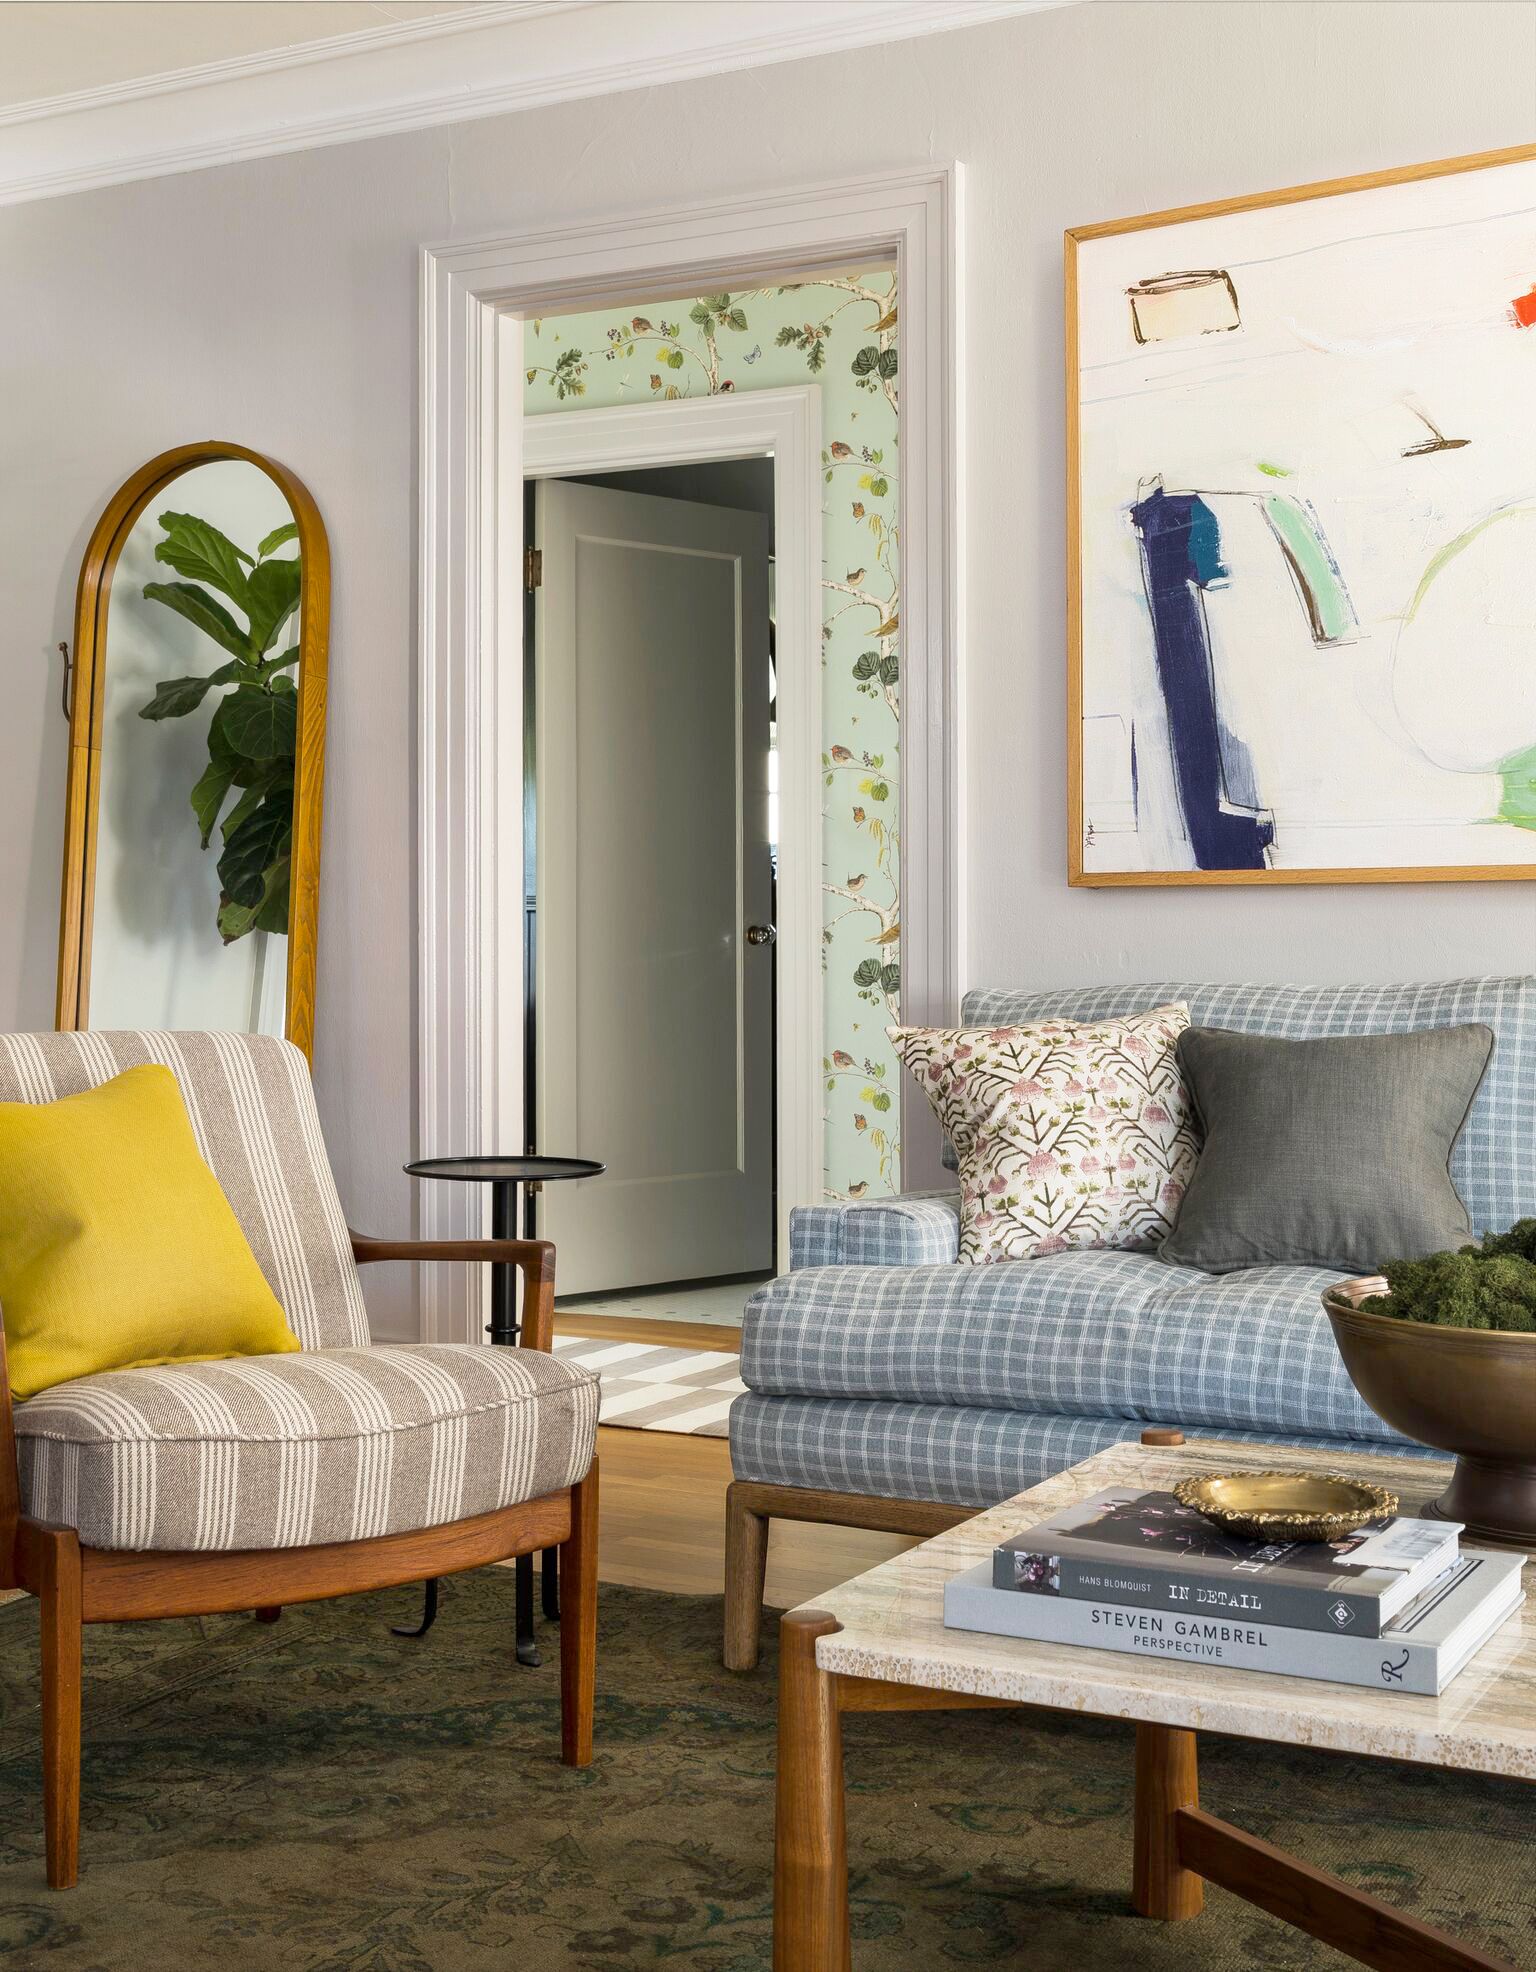 40 Best Living Room Color Ideas Top, Popular Colors For Living Room Walls